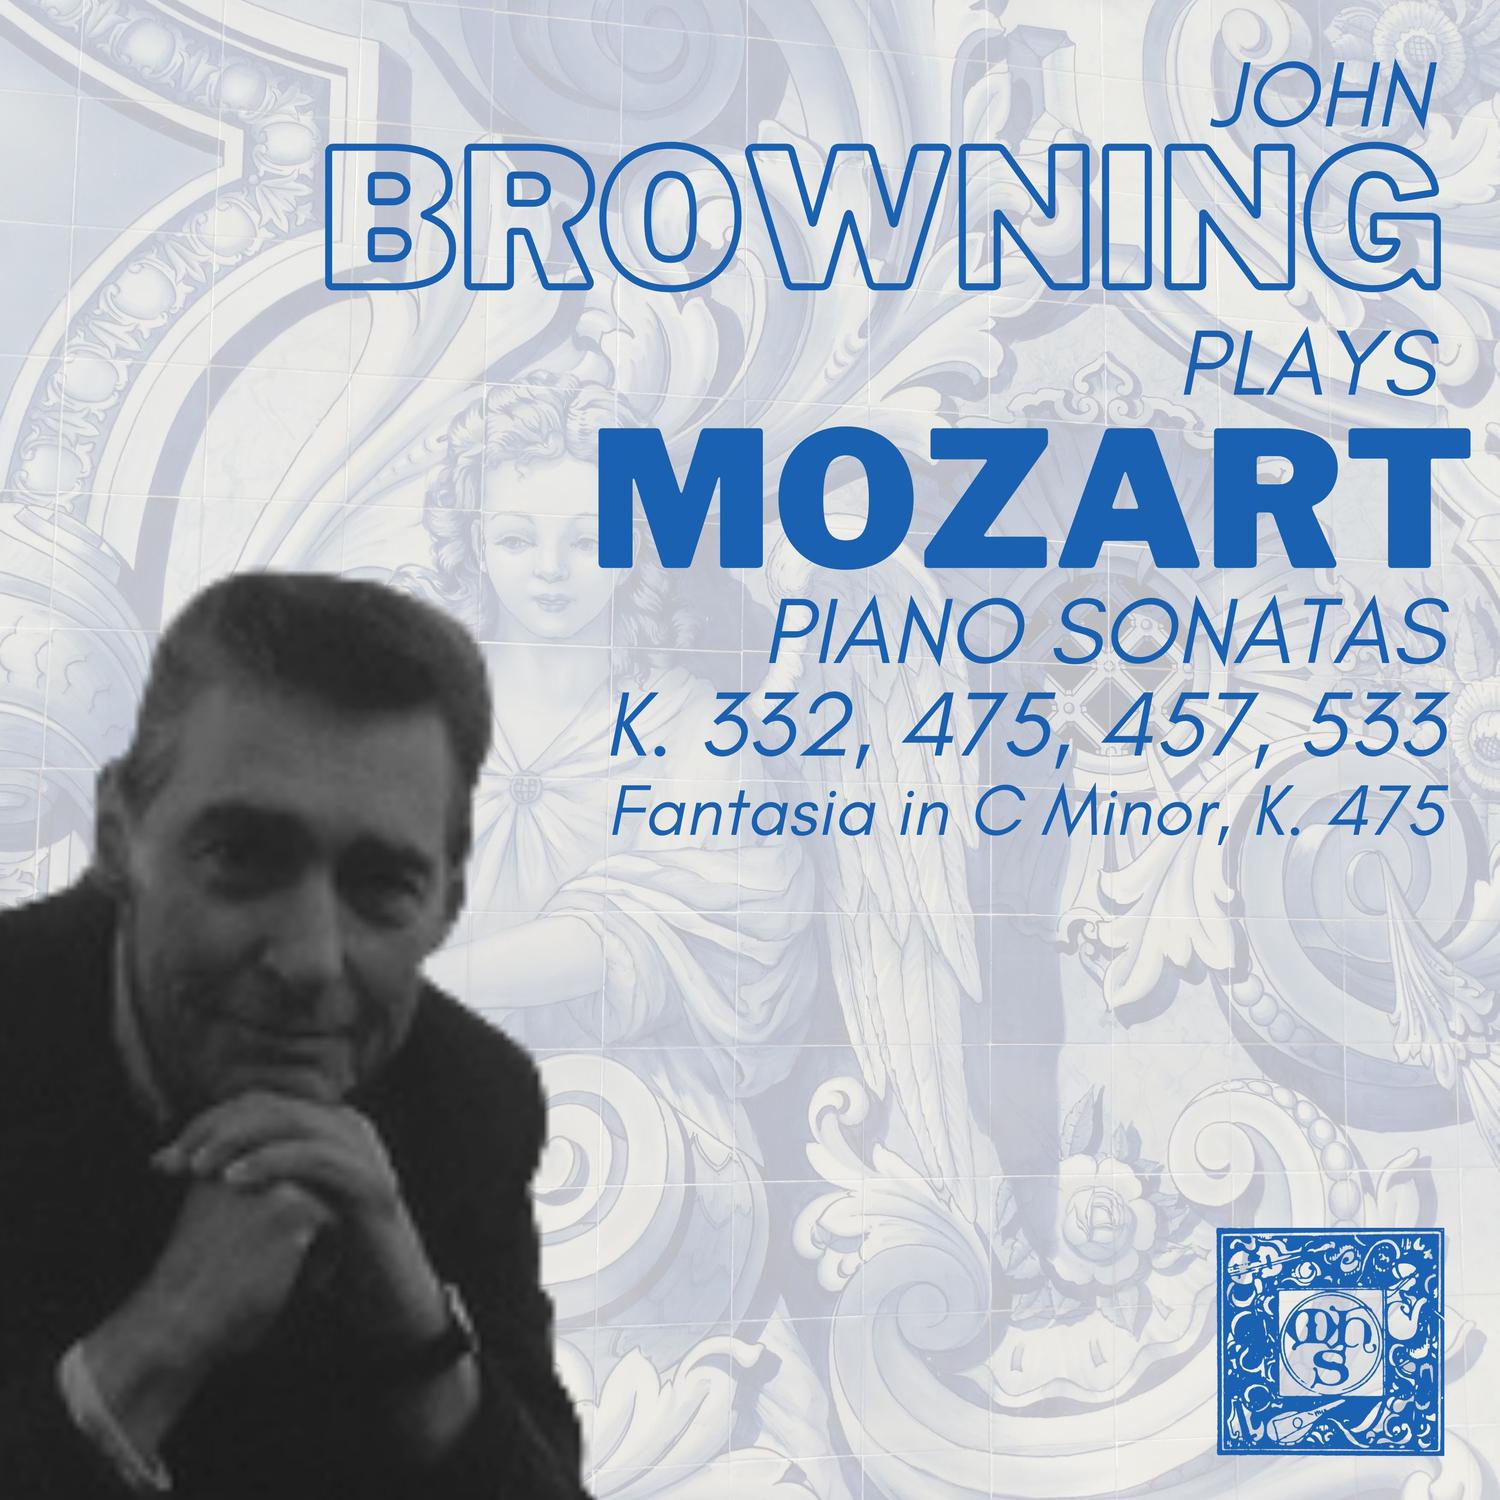 John Browning - Piano Sonata No. 12 in F Major, K. 332: I. Allegro